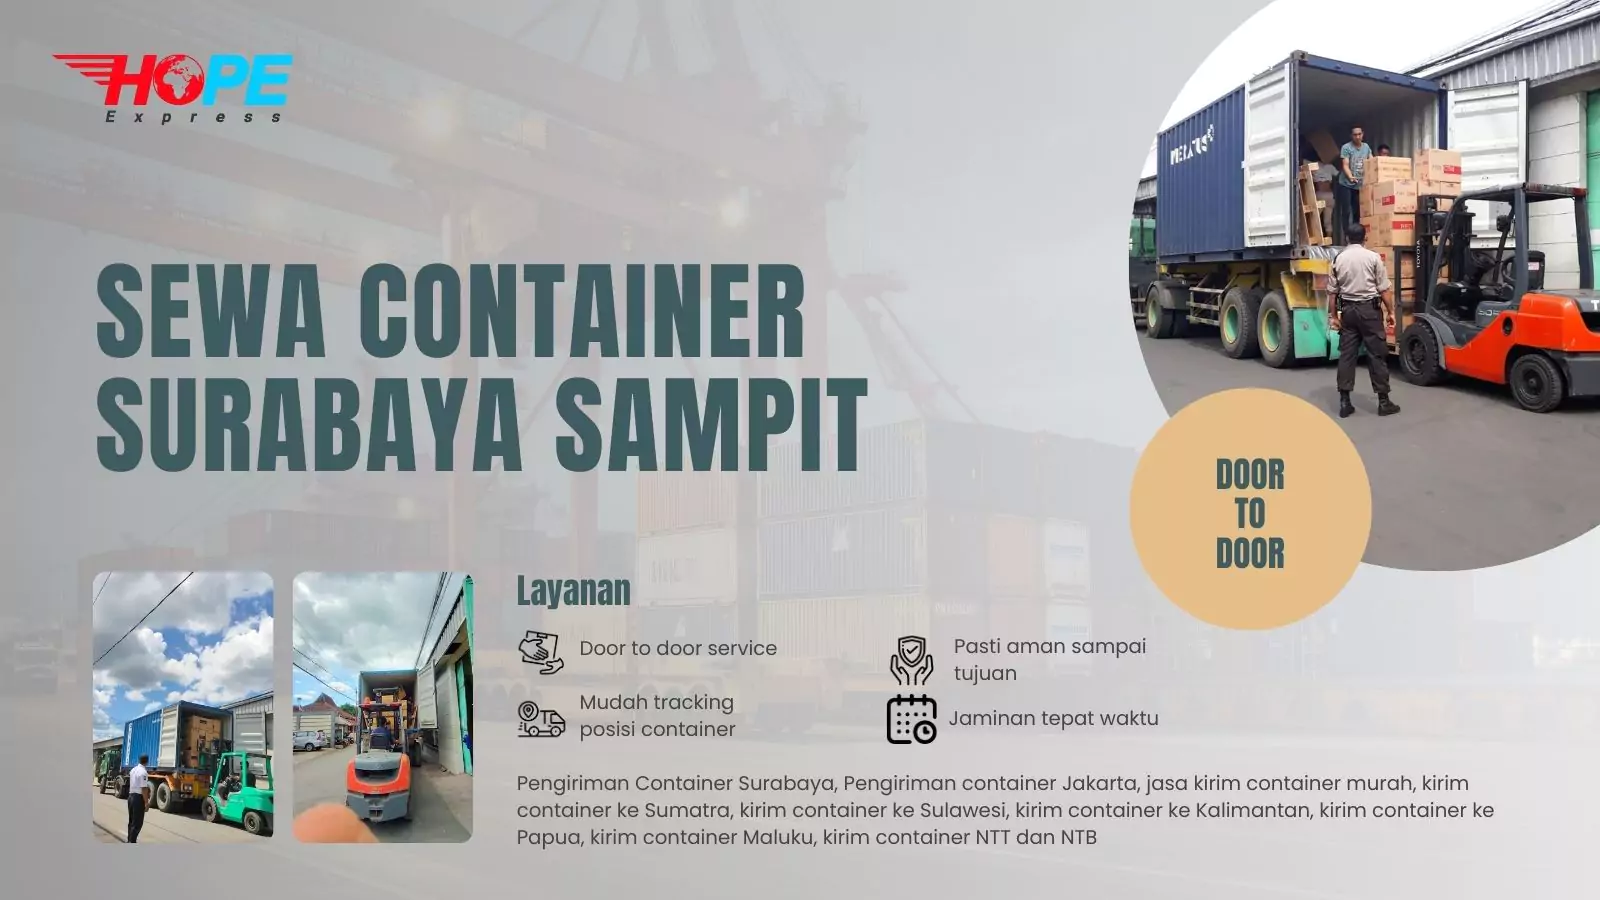 Sewa Container Surabaya Sampit